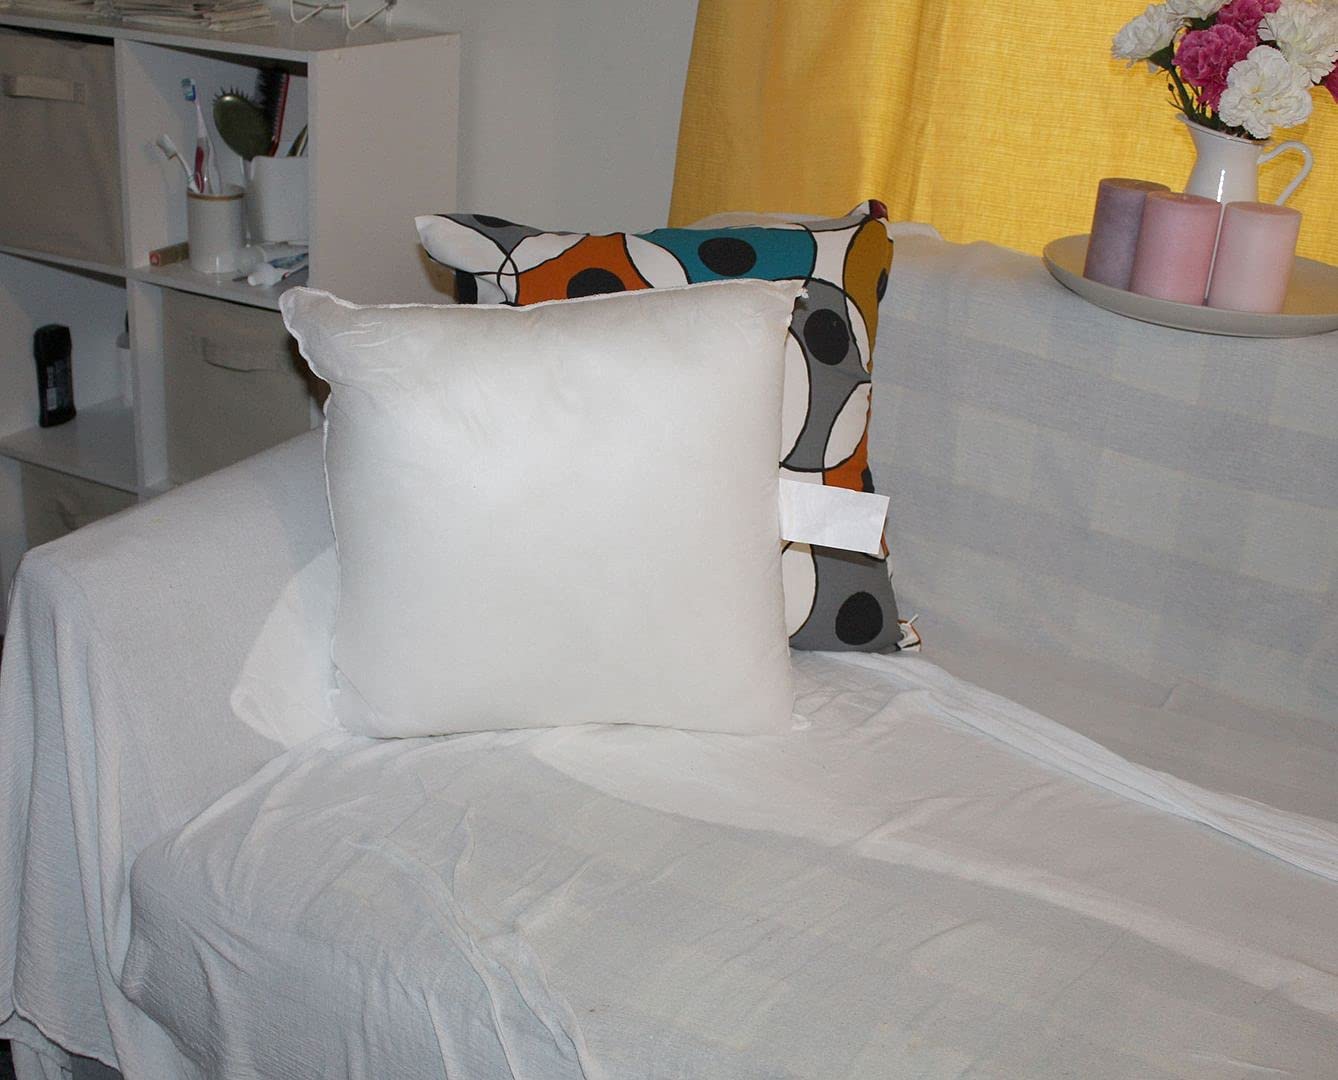 Mybecca 18 X 18 Sham Stuffer Square Hypoallergenic Pillow Insert Polyester, White